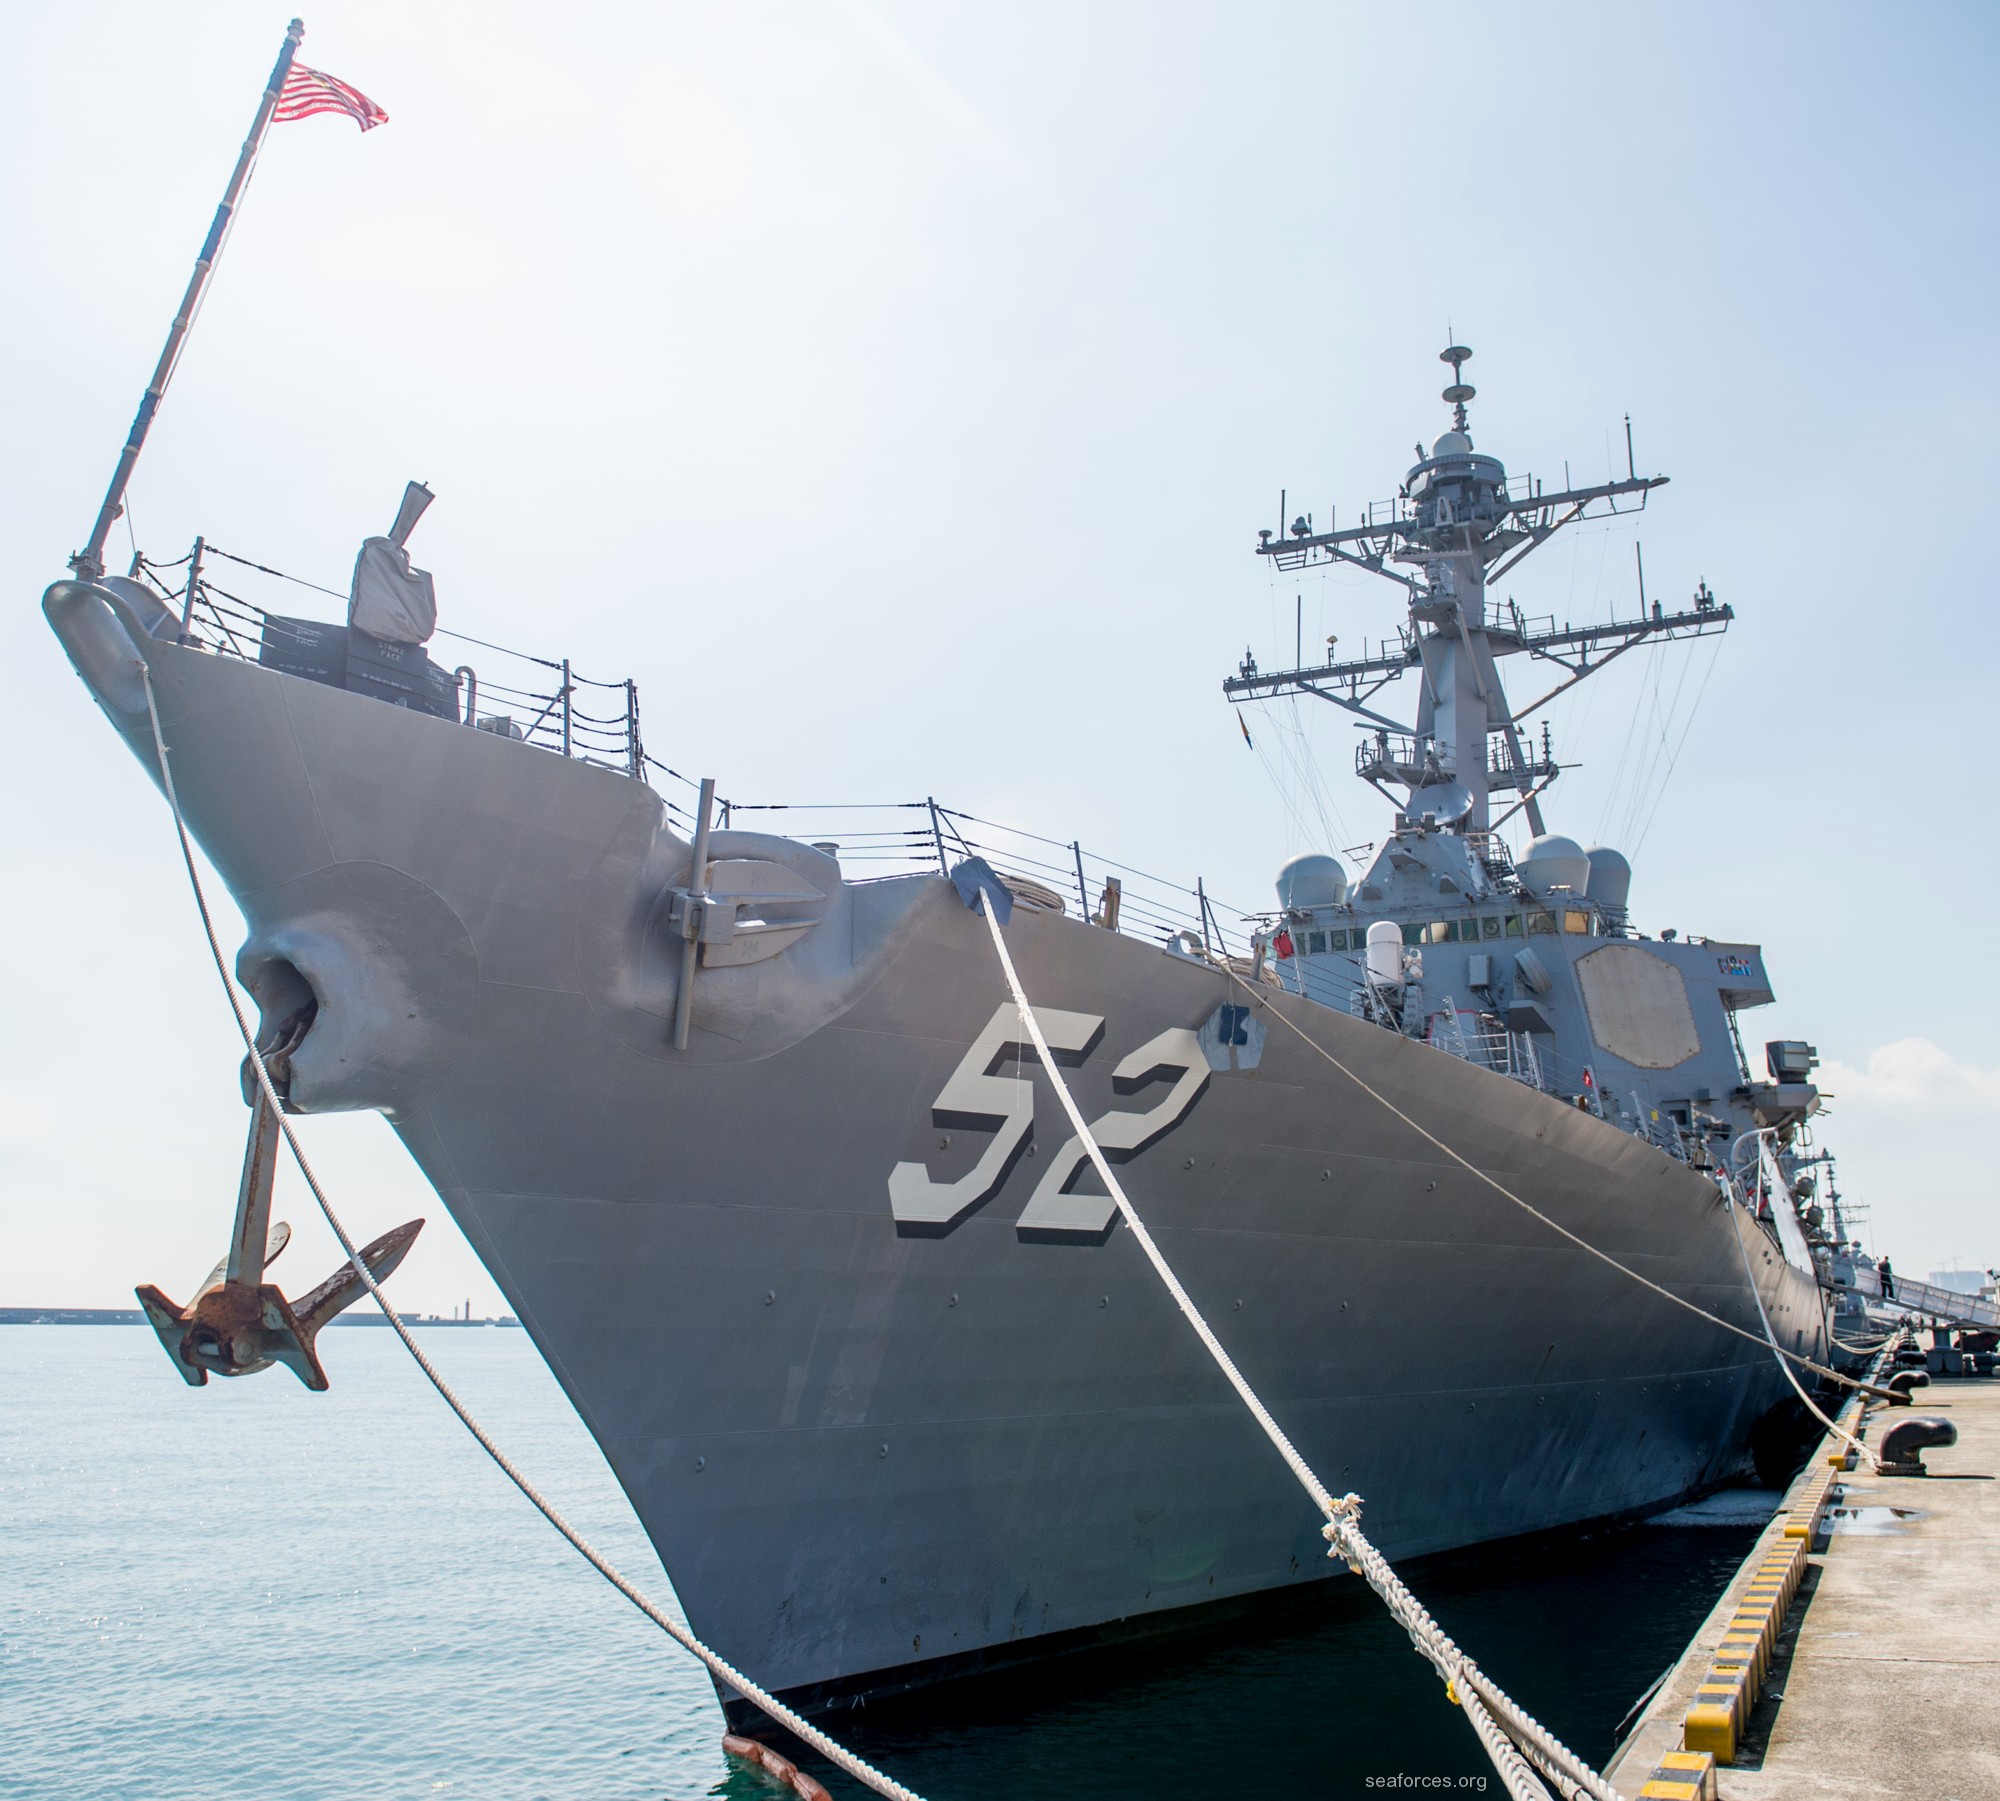 ddg-52 uss barry guided missile destroyer us navy 07 busan korea